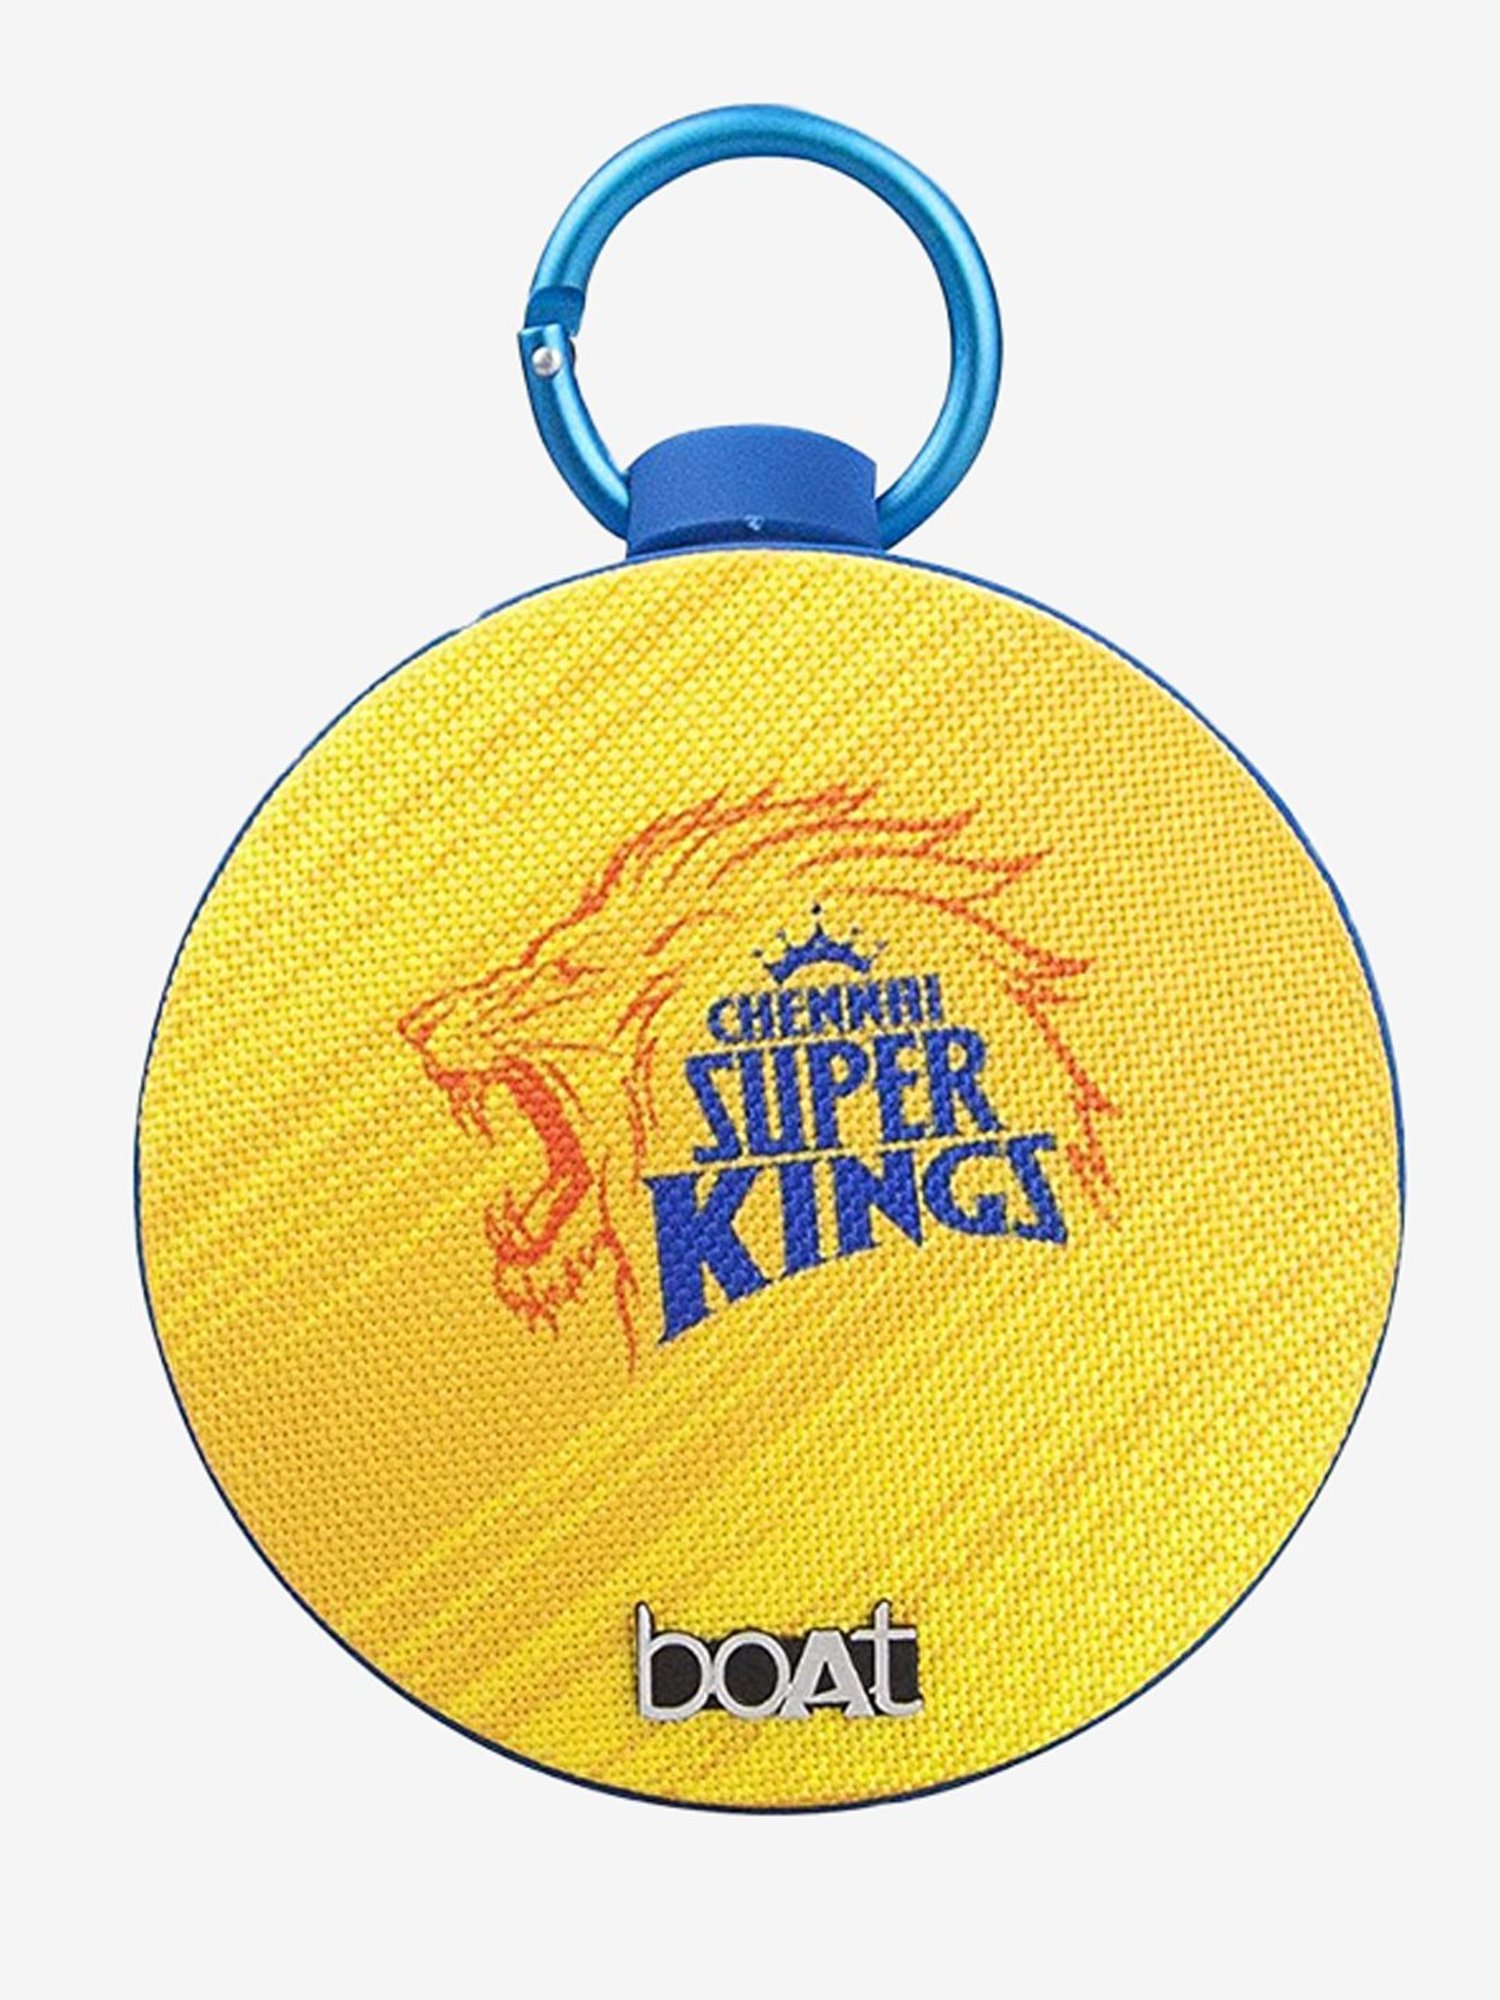 chennai super kings yellow logo